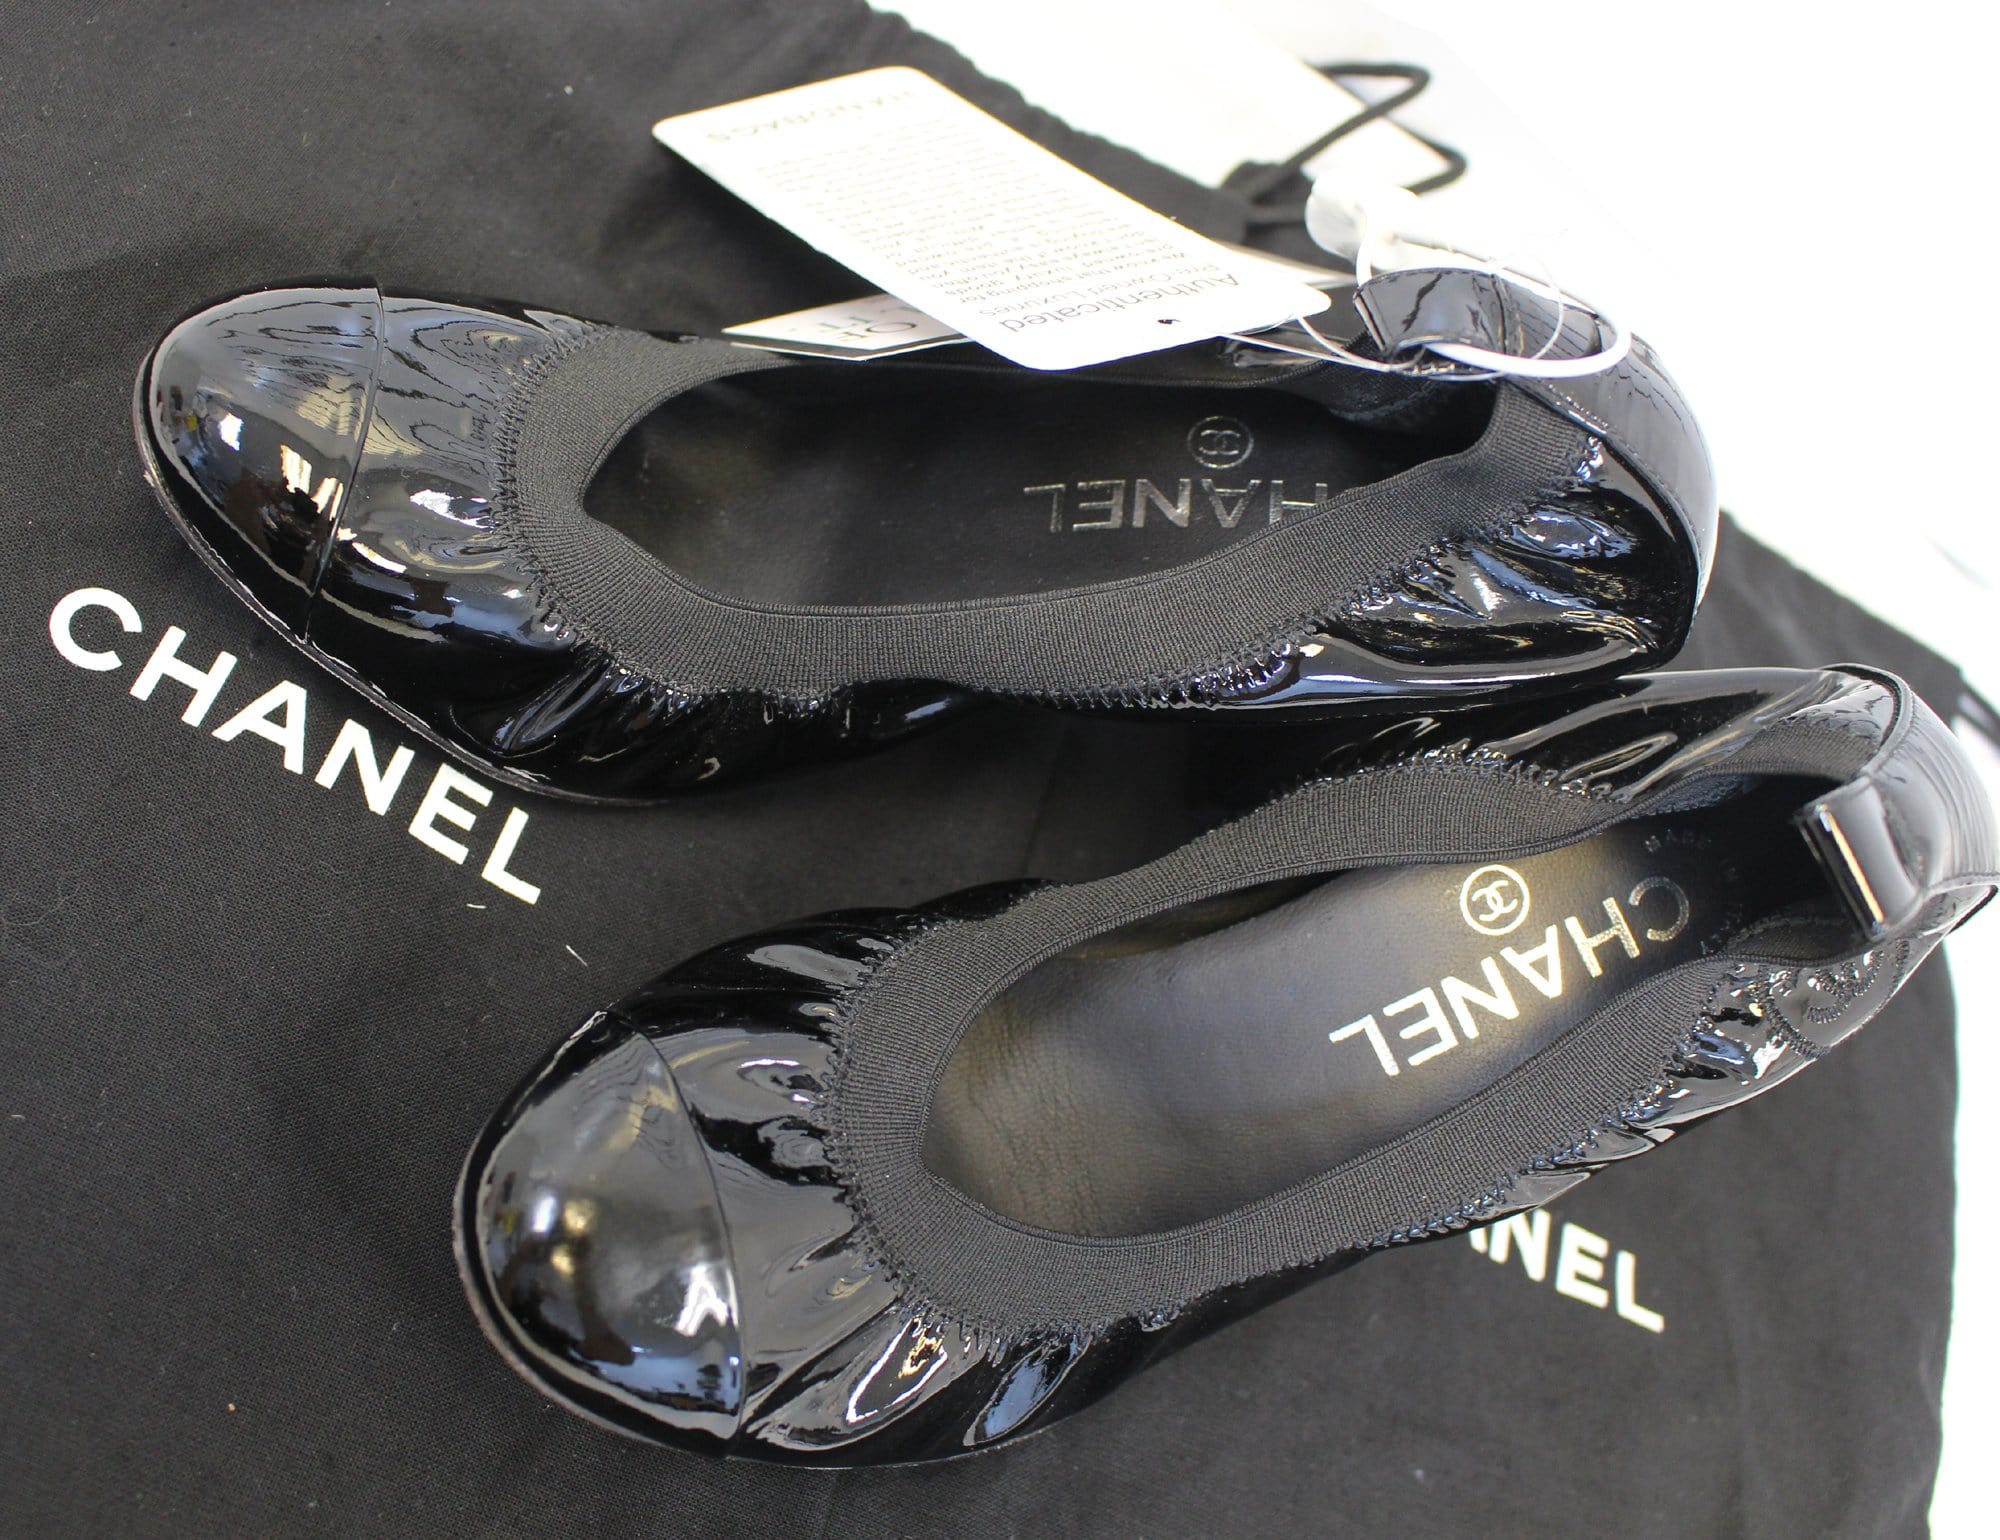 CHANEL Black Leather Elastic Ballet Pumps Size 36